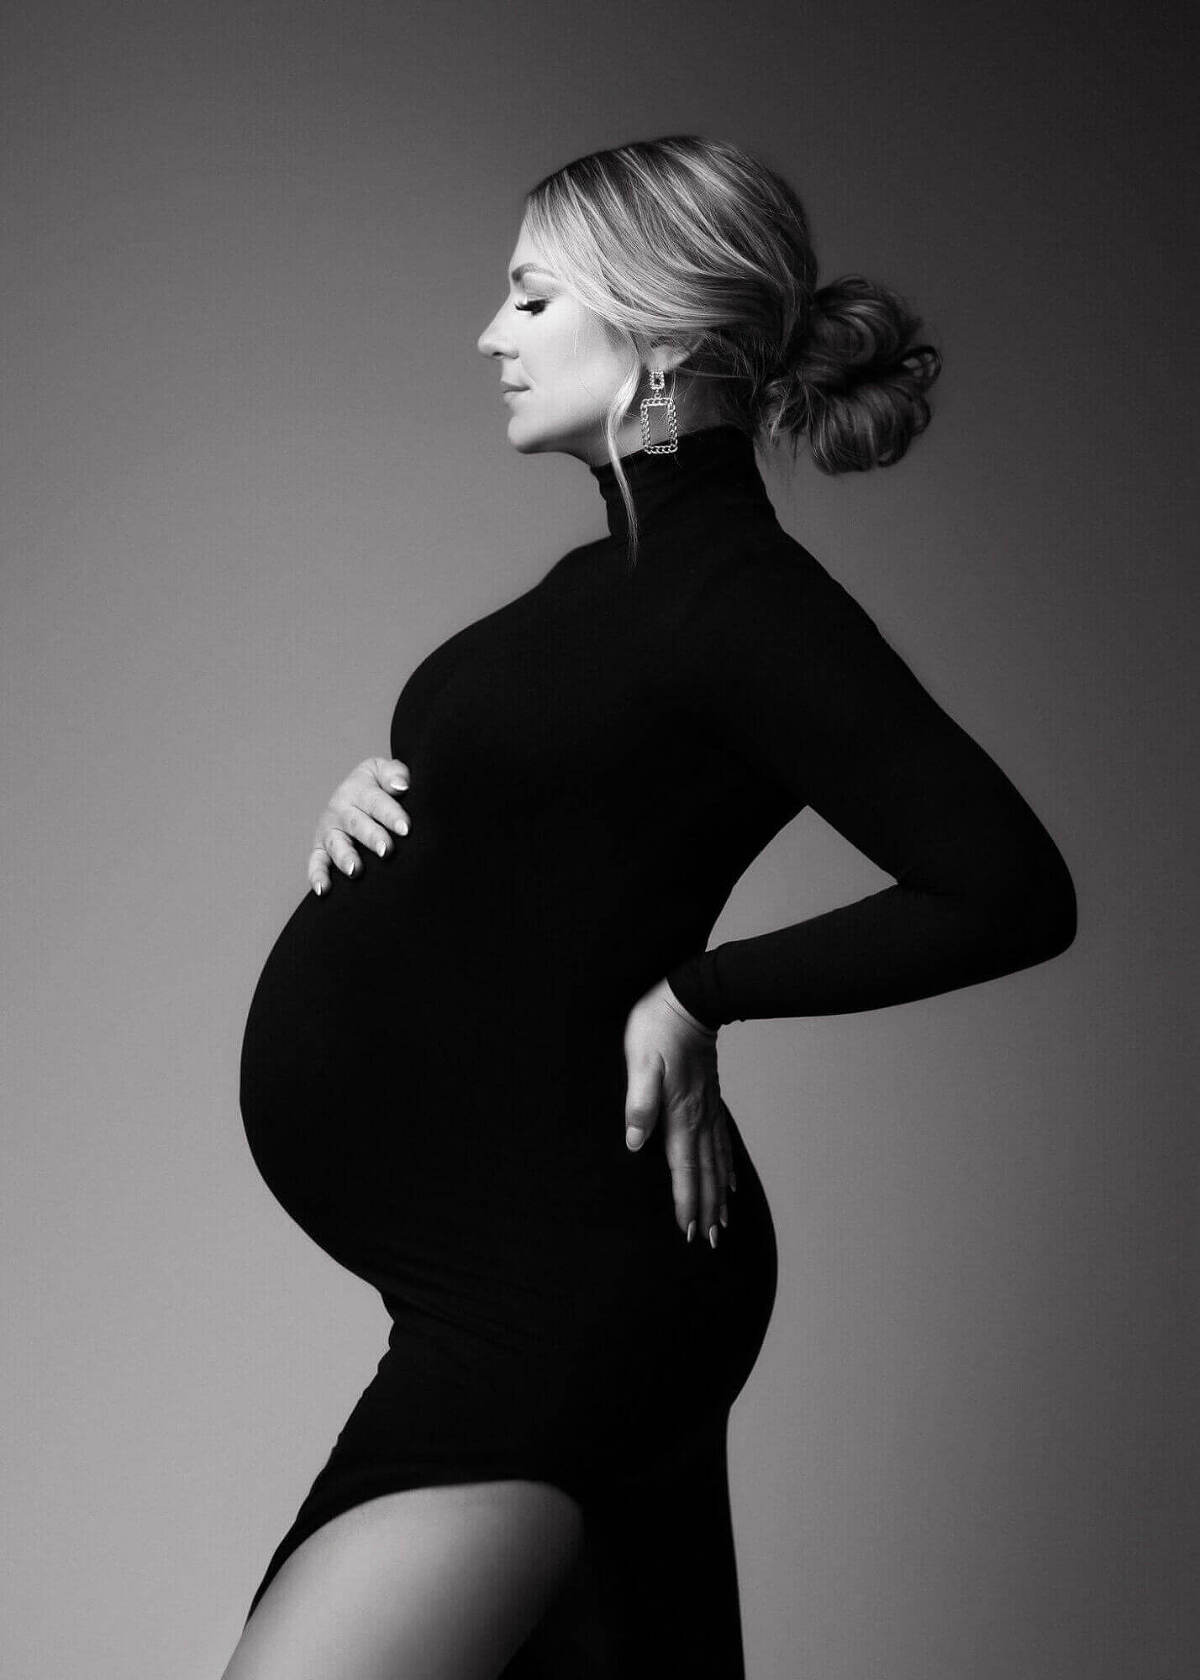 prosper tx maternity photographer, maternity photography near me prosper TX, pregnancy photoshoot prosper TX